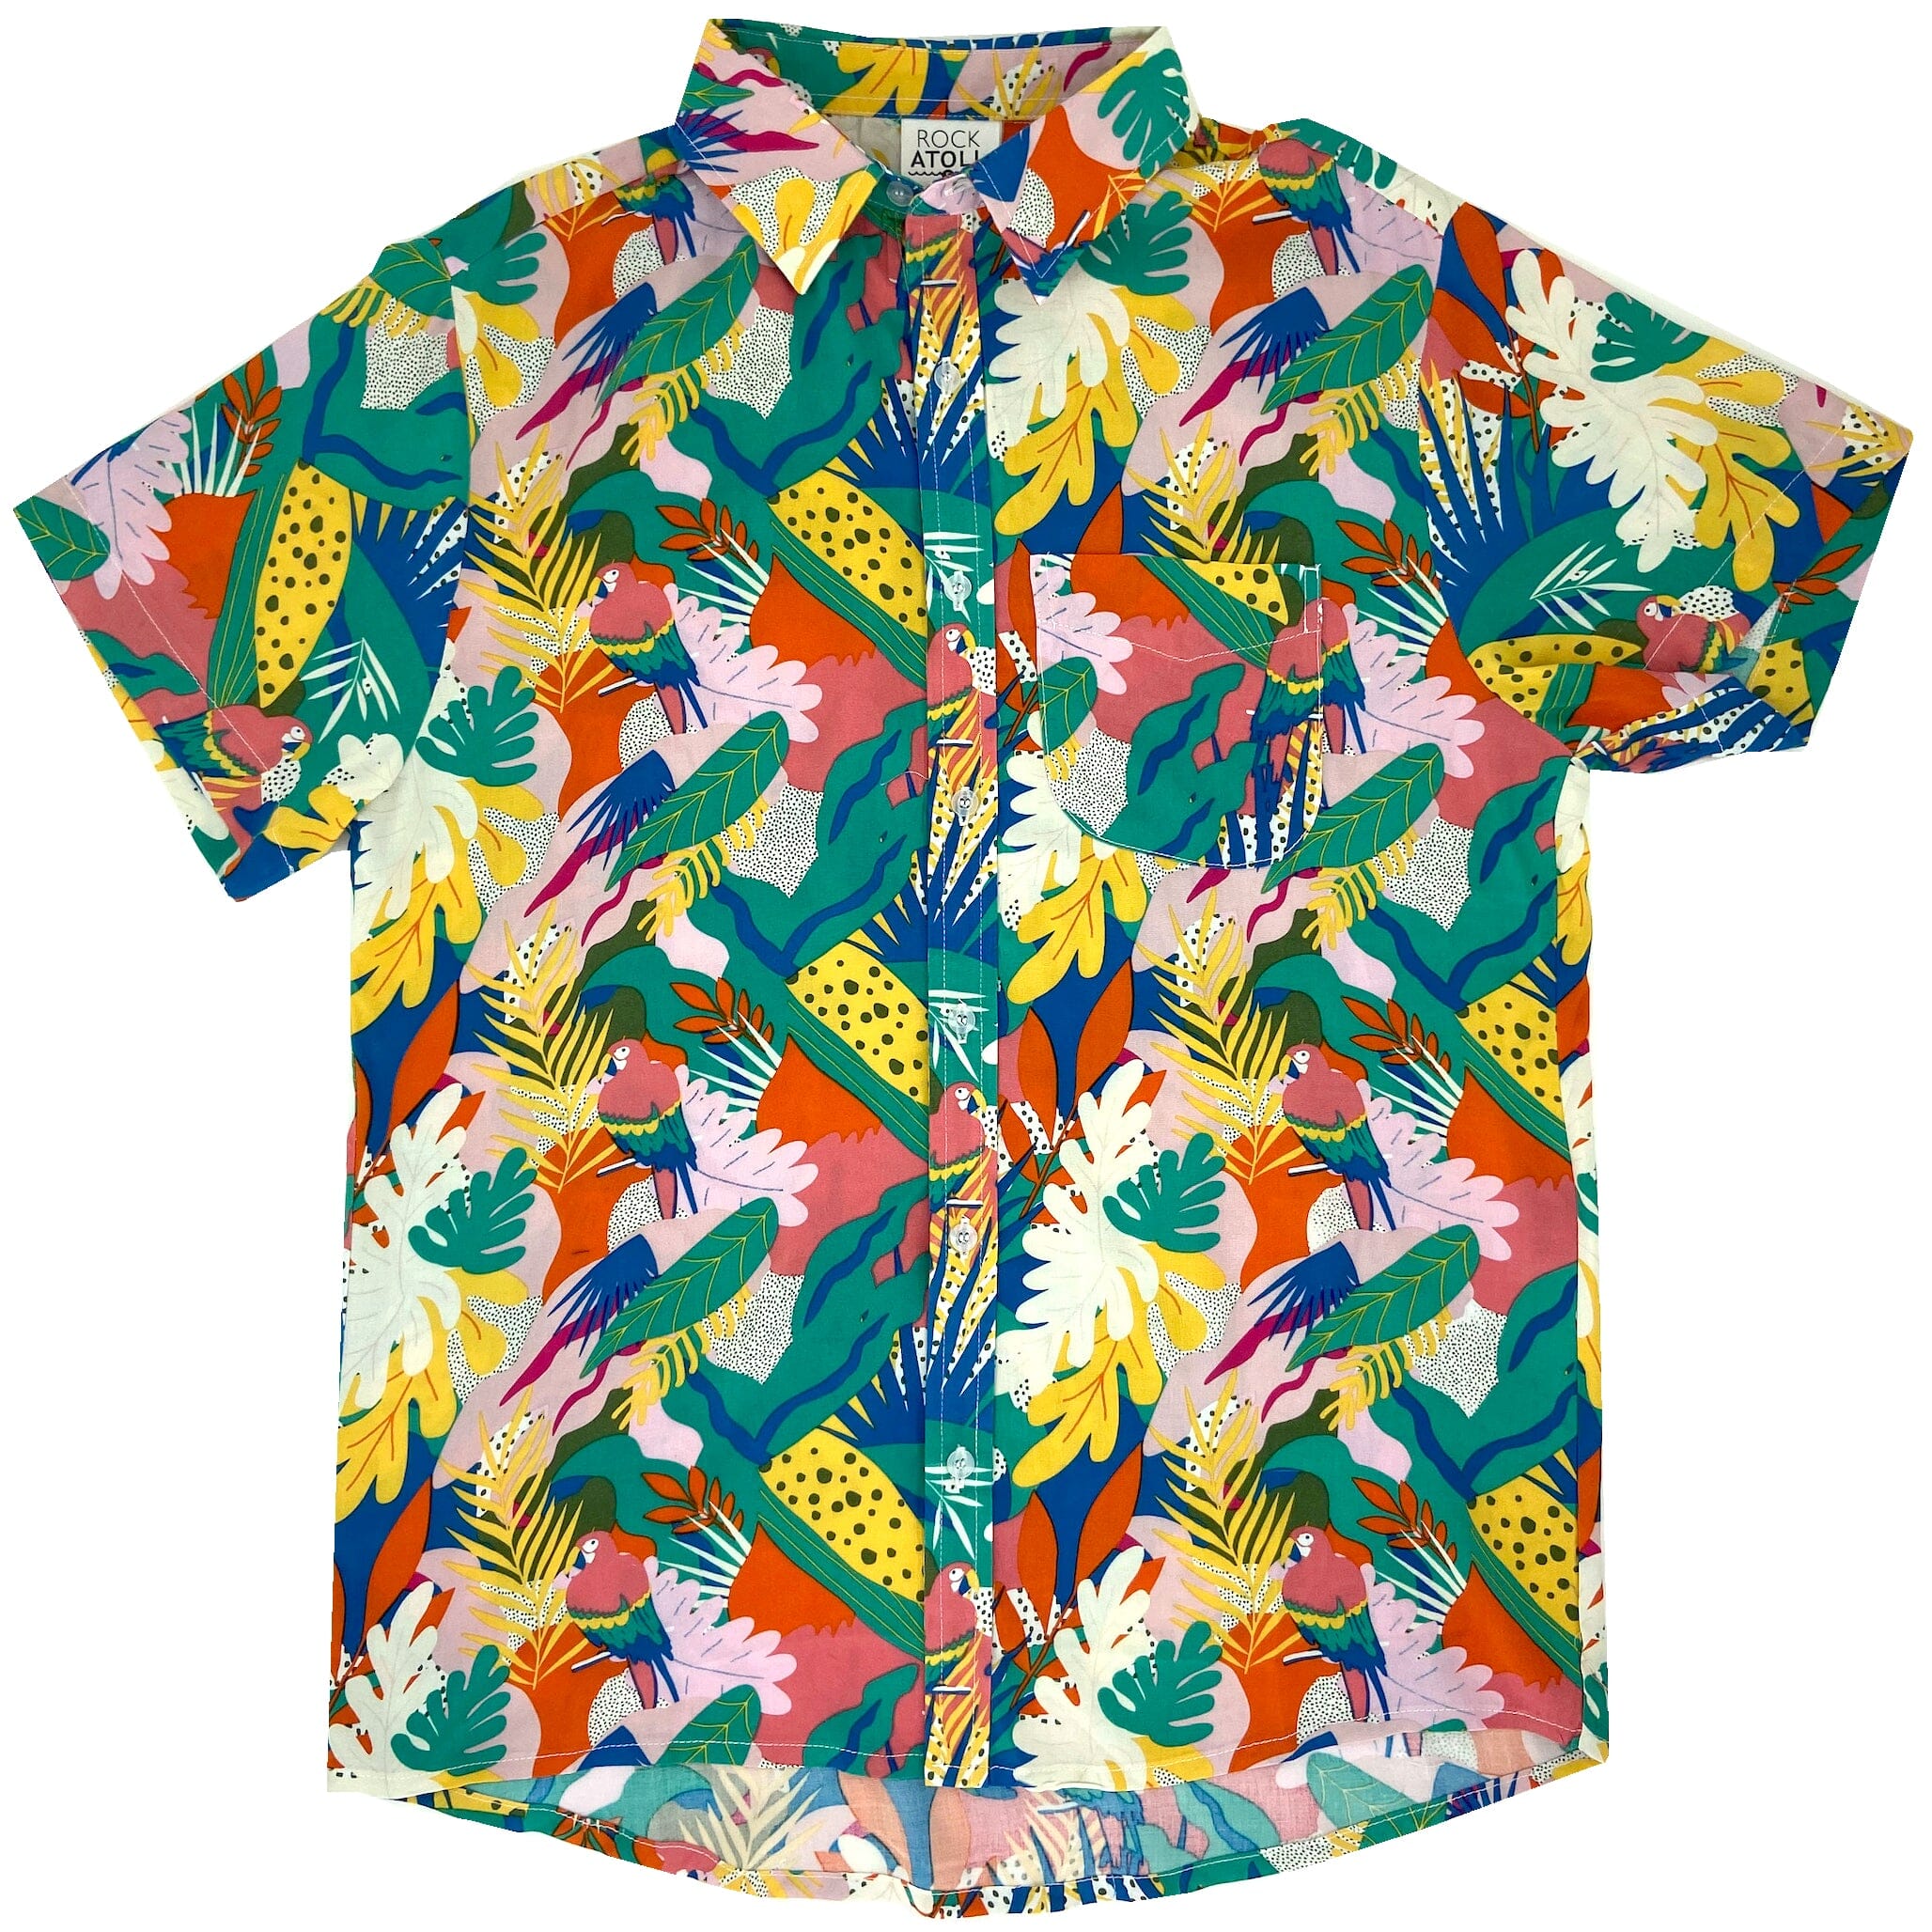 Bright Bold Tropical Abstract Jungle Toucan Print Memphis Design Shirt